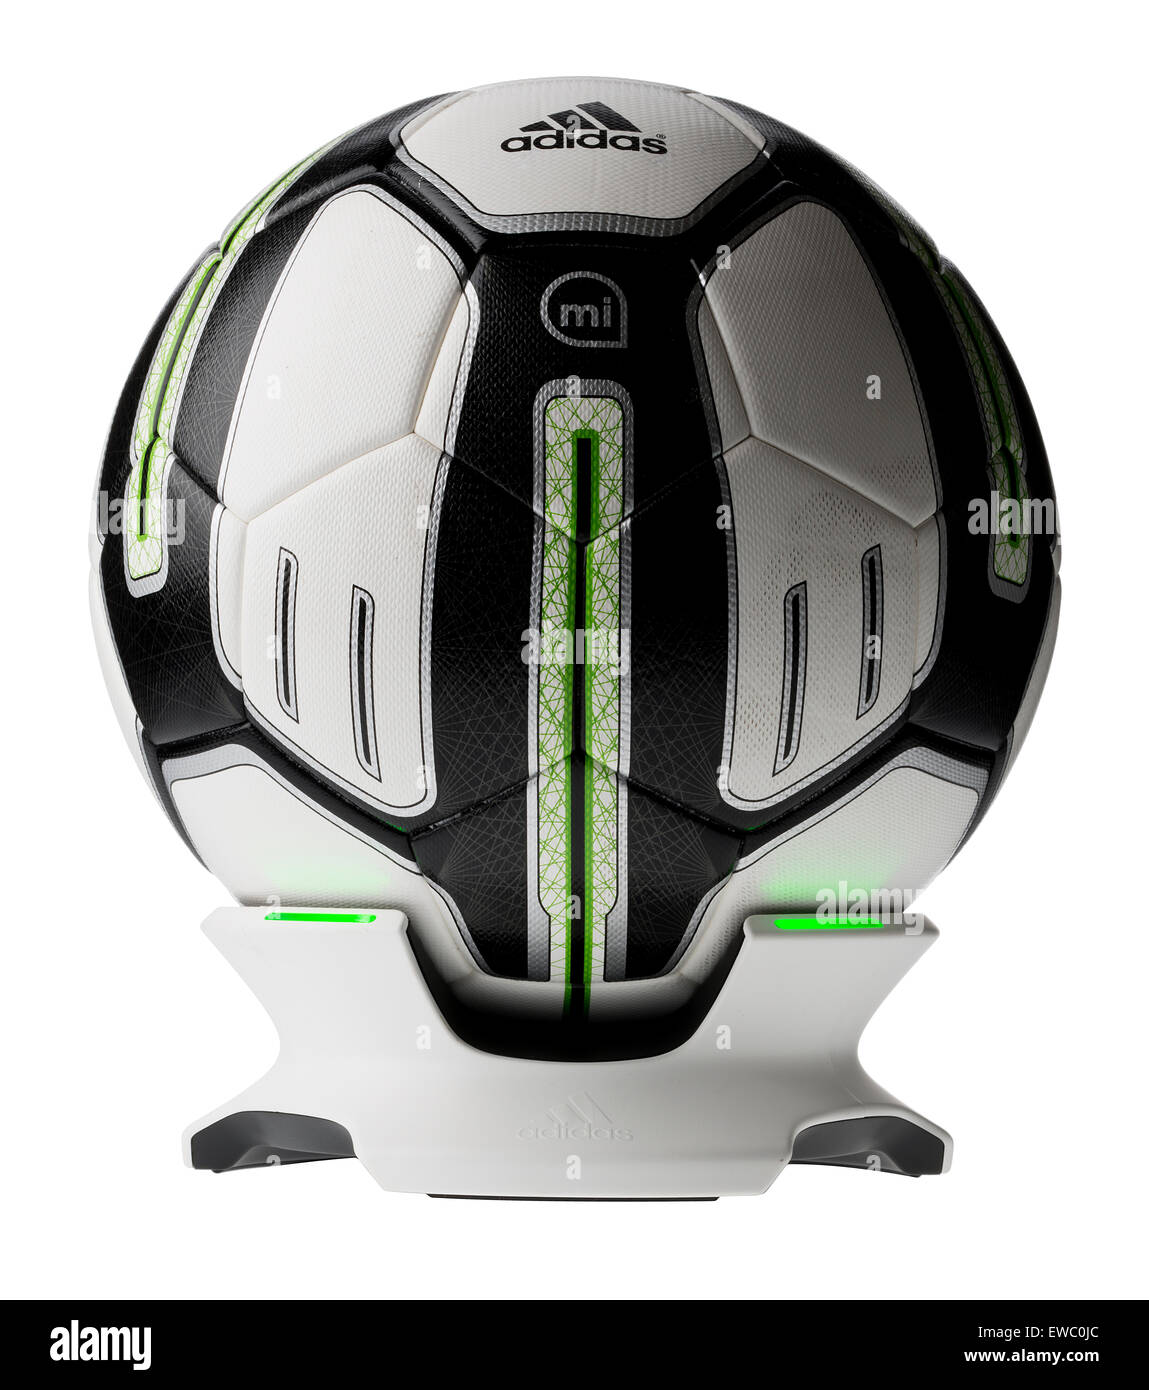 Adidas MiCoach Fußball. Trainingsprogramm. Intelligente Ball. Trainingsball  mit integriertem Sensor Stockfotografie - Alamy